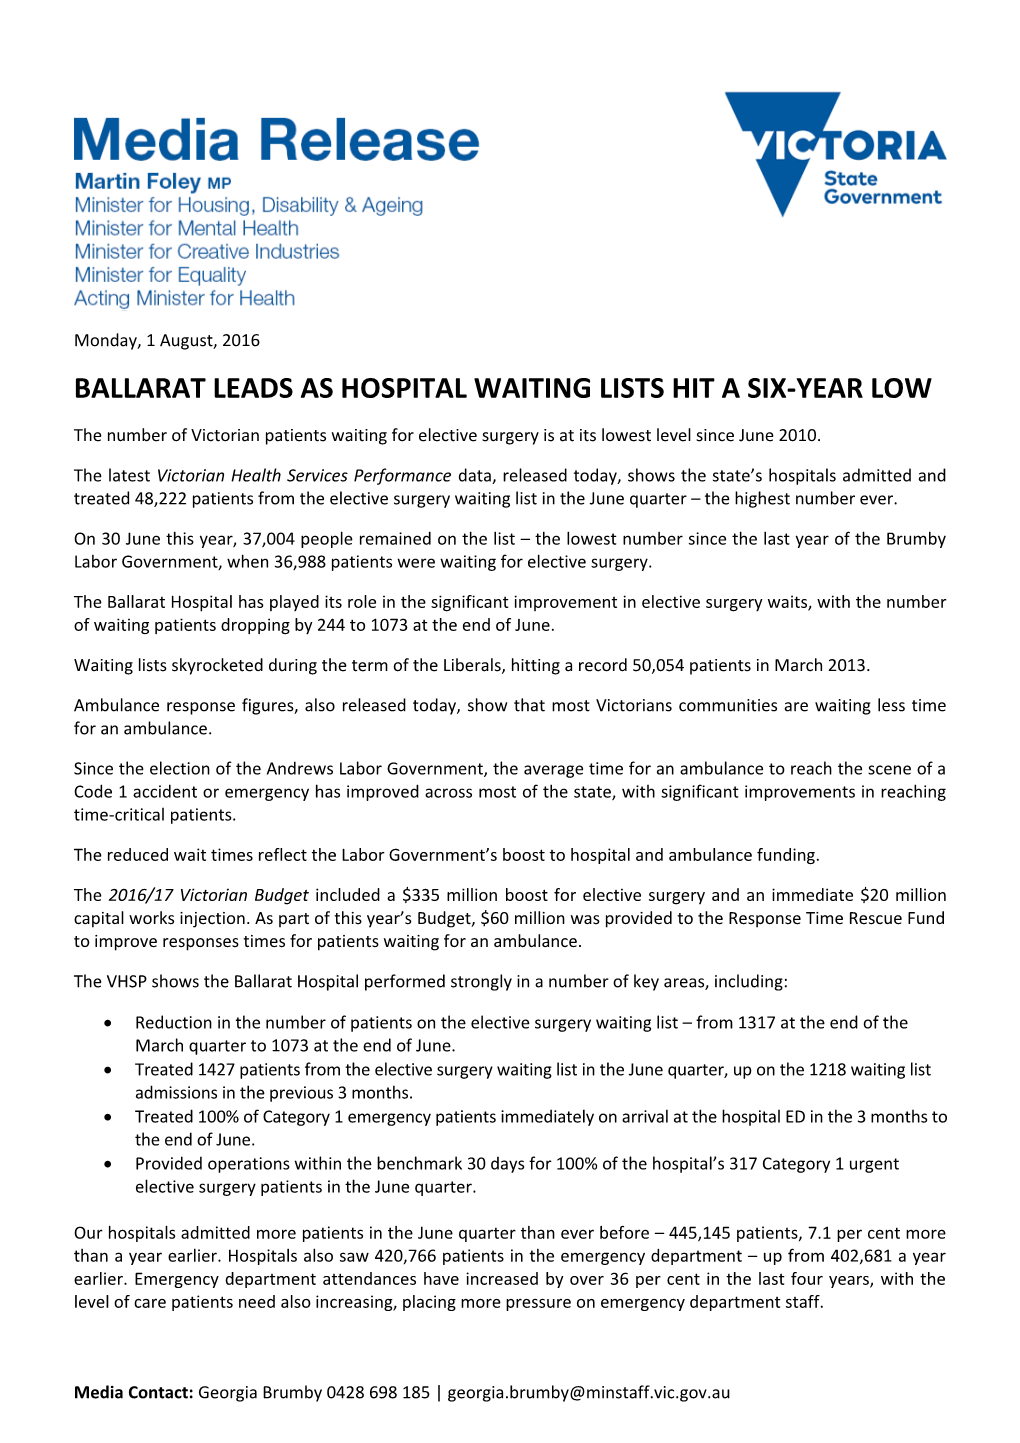 Ballarat Leads As Hospital Waiting Lists Hit a Six-Year Low